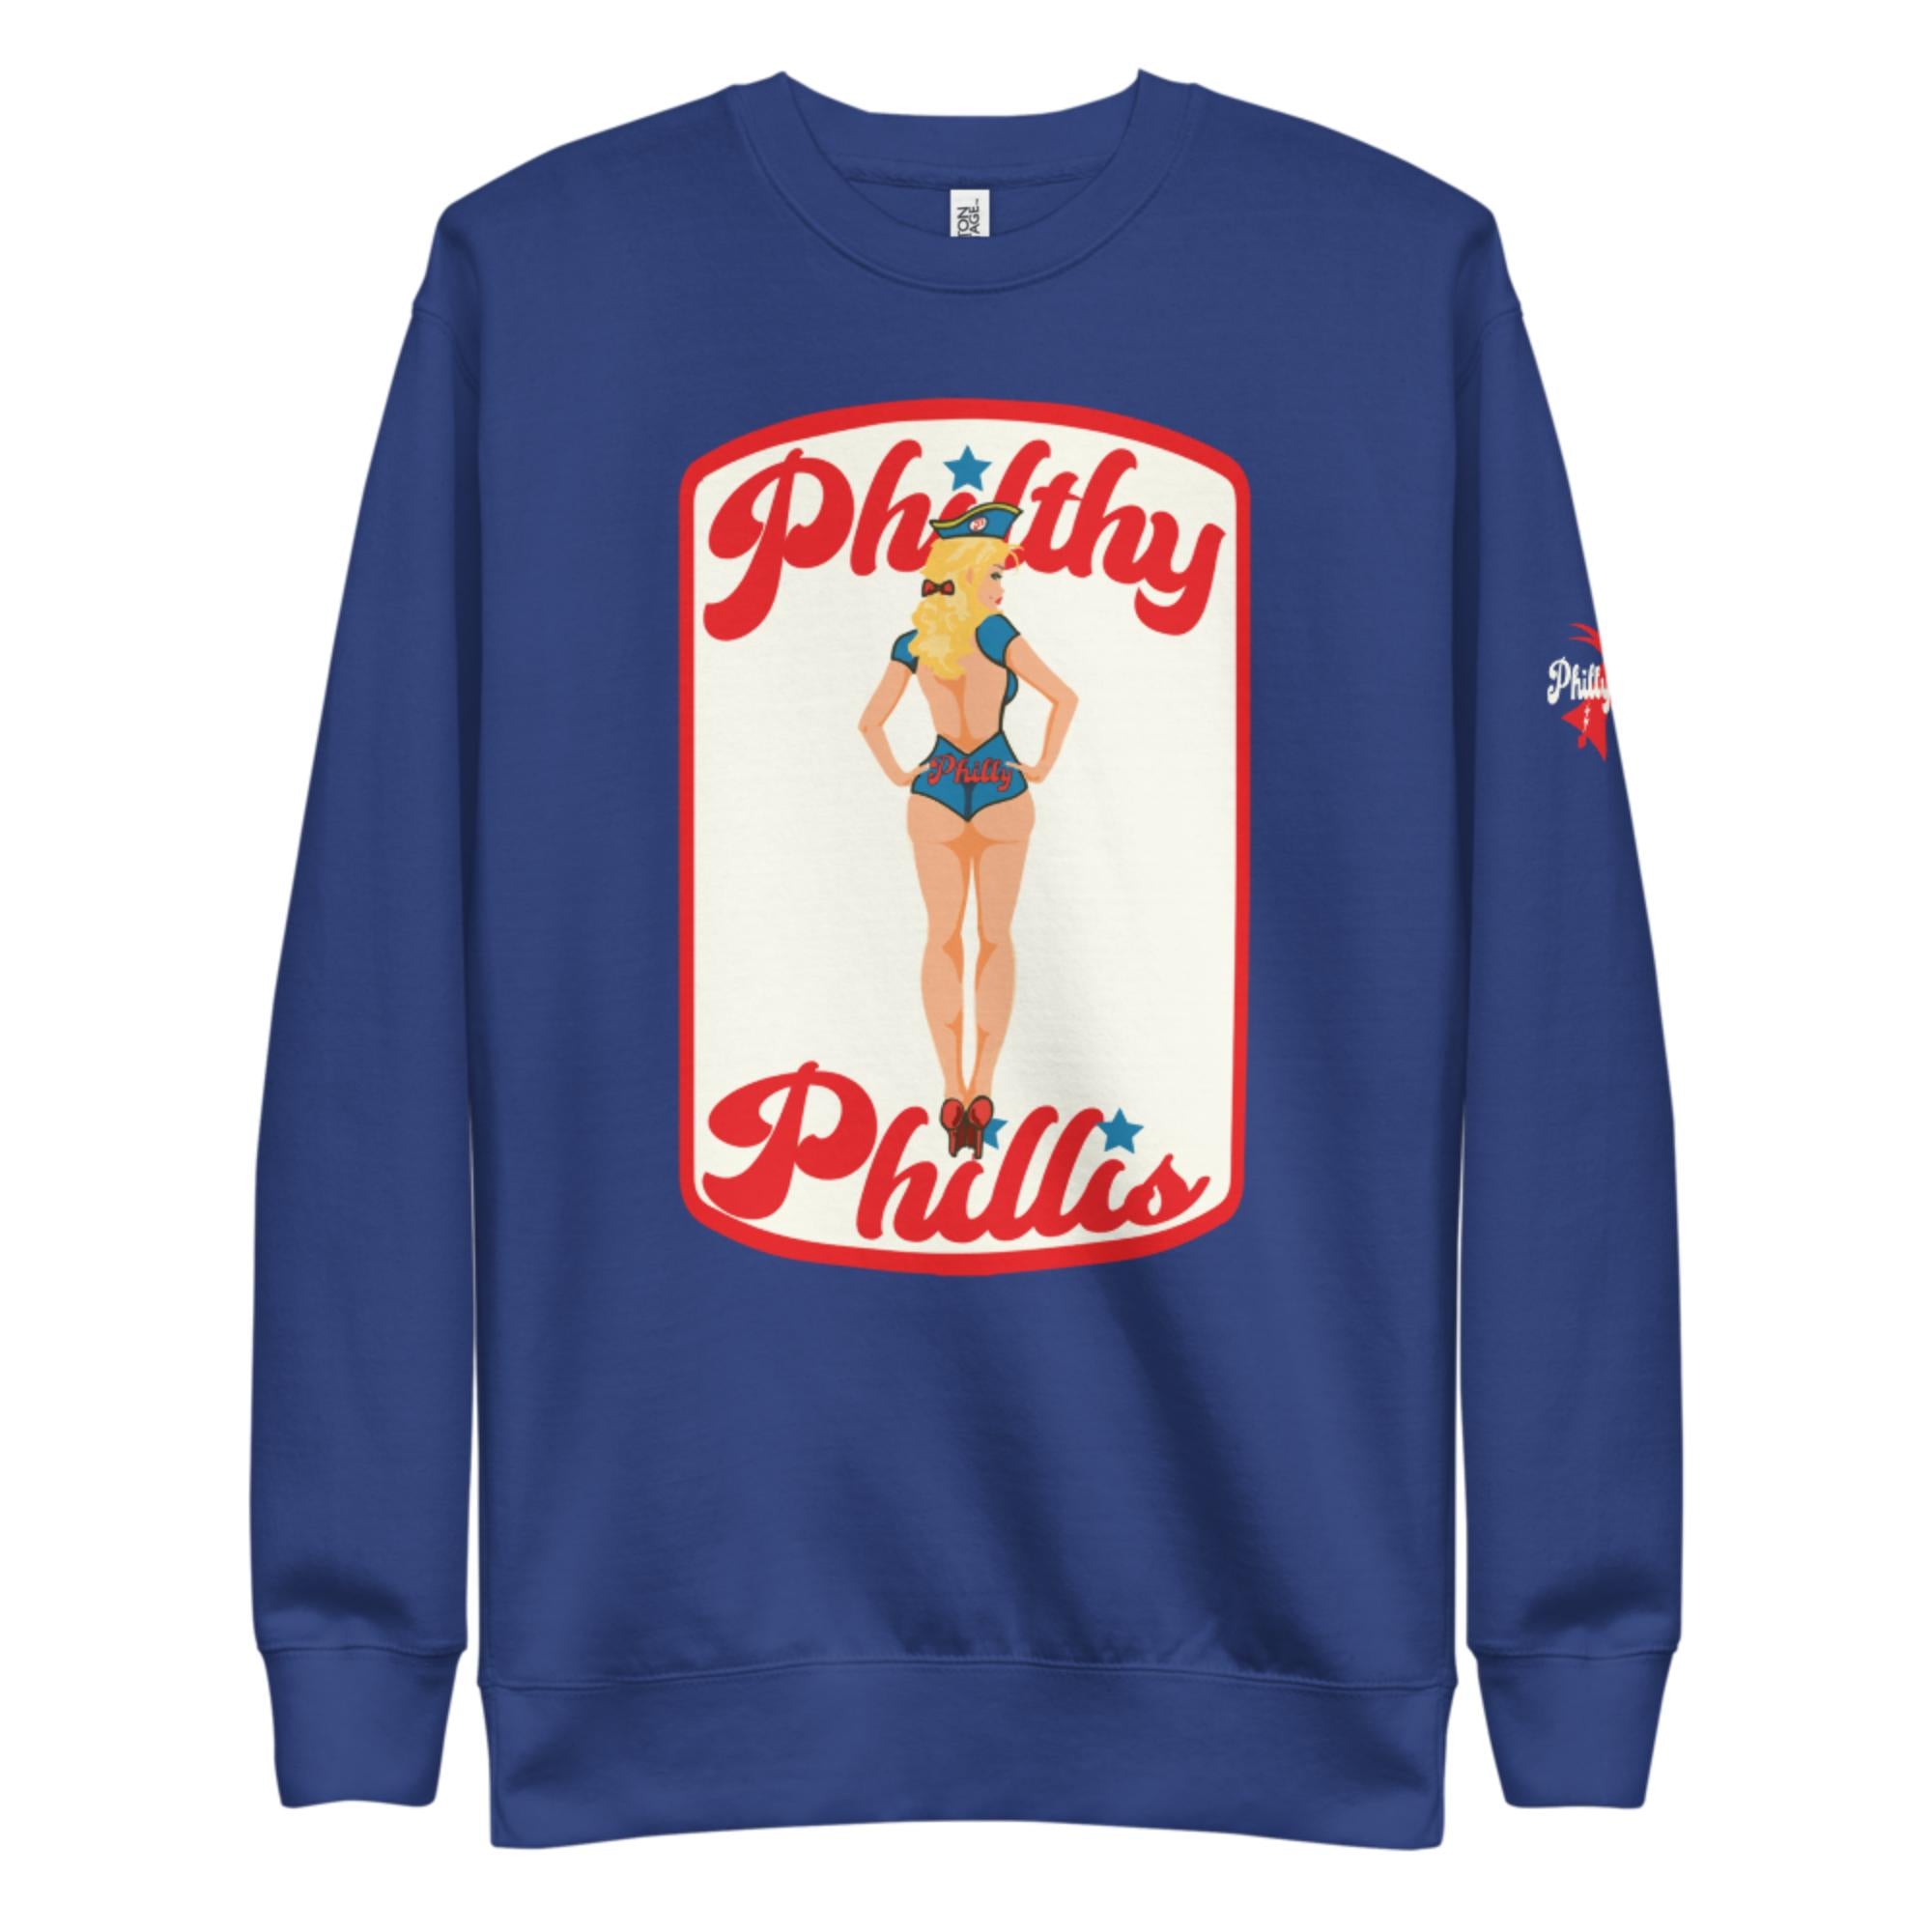 "Philthy Phillis" Sweatshirt